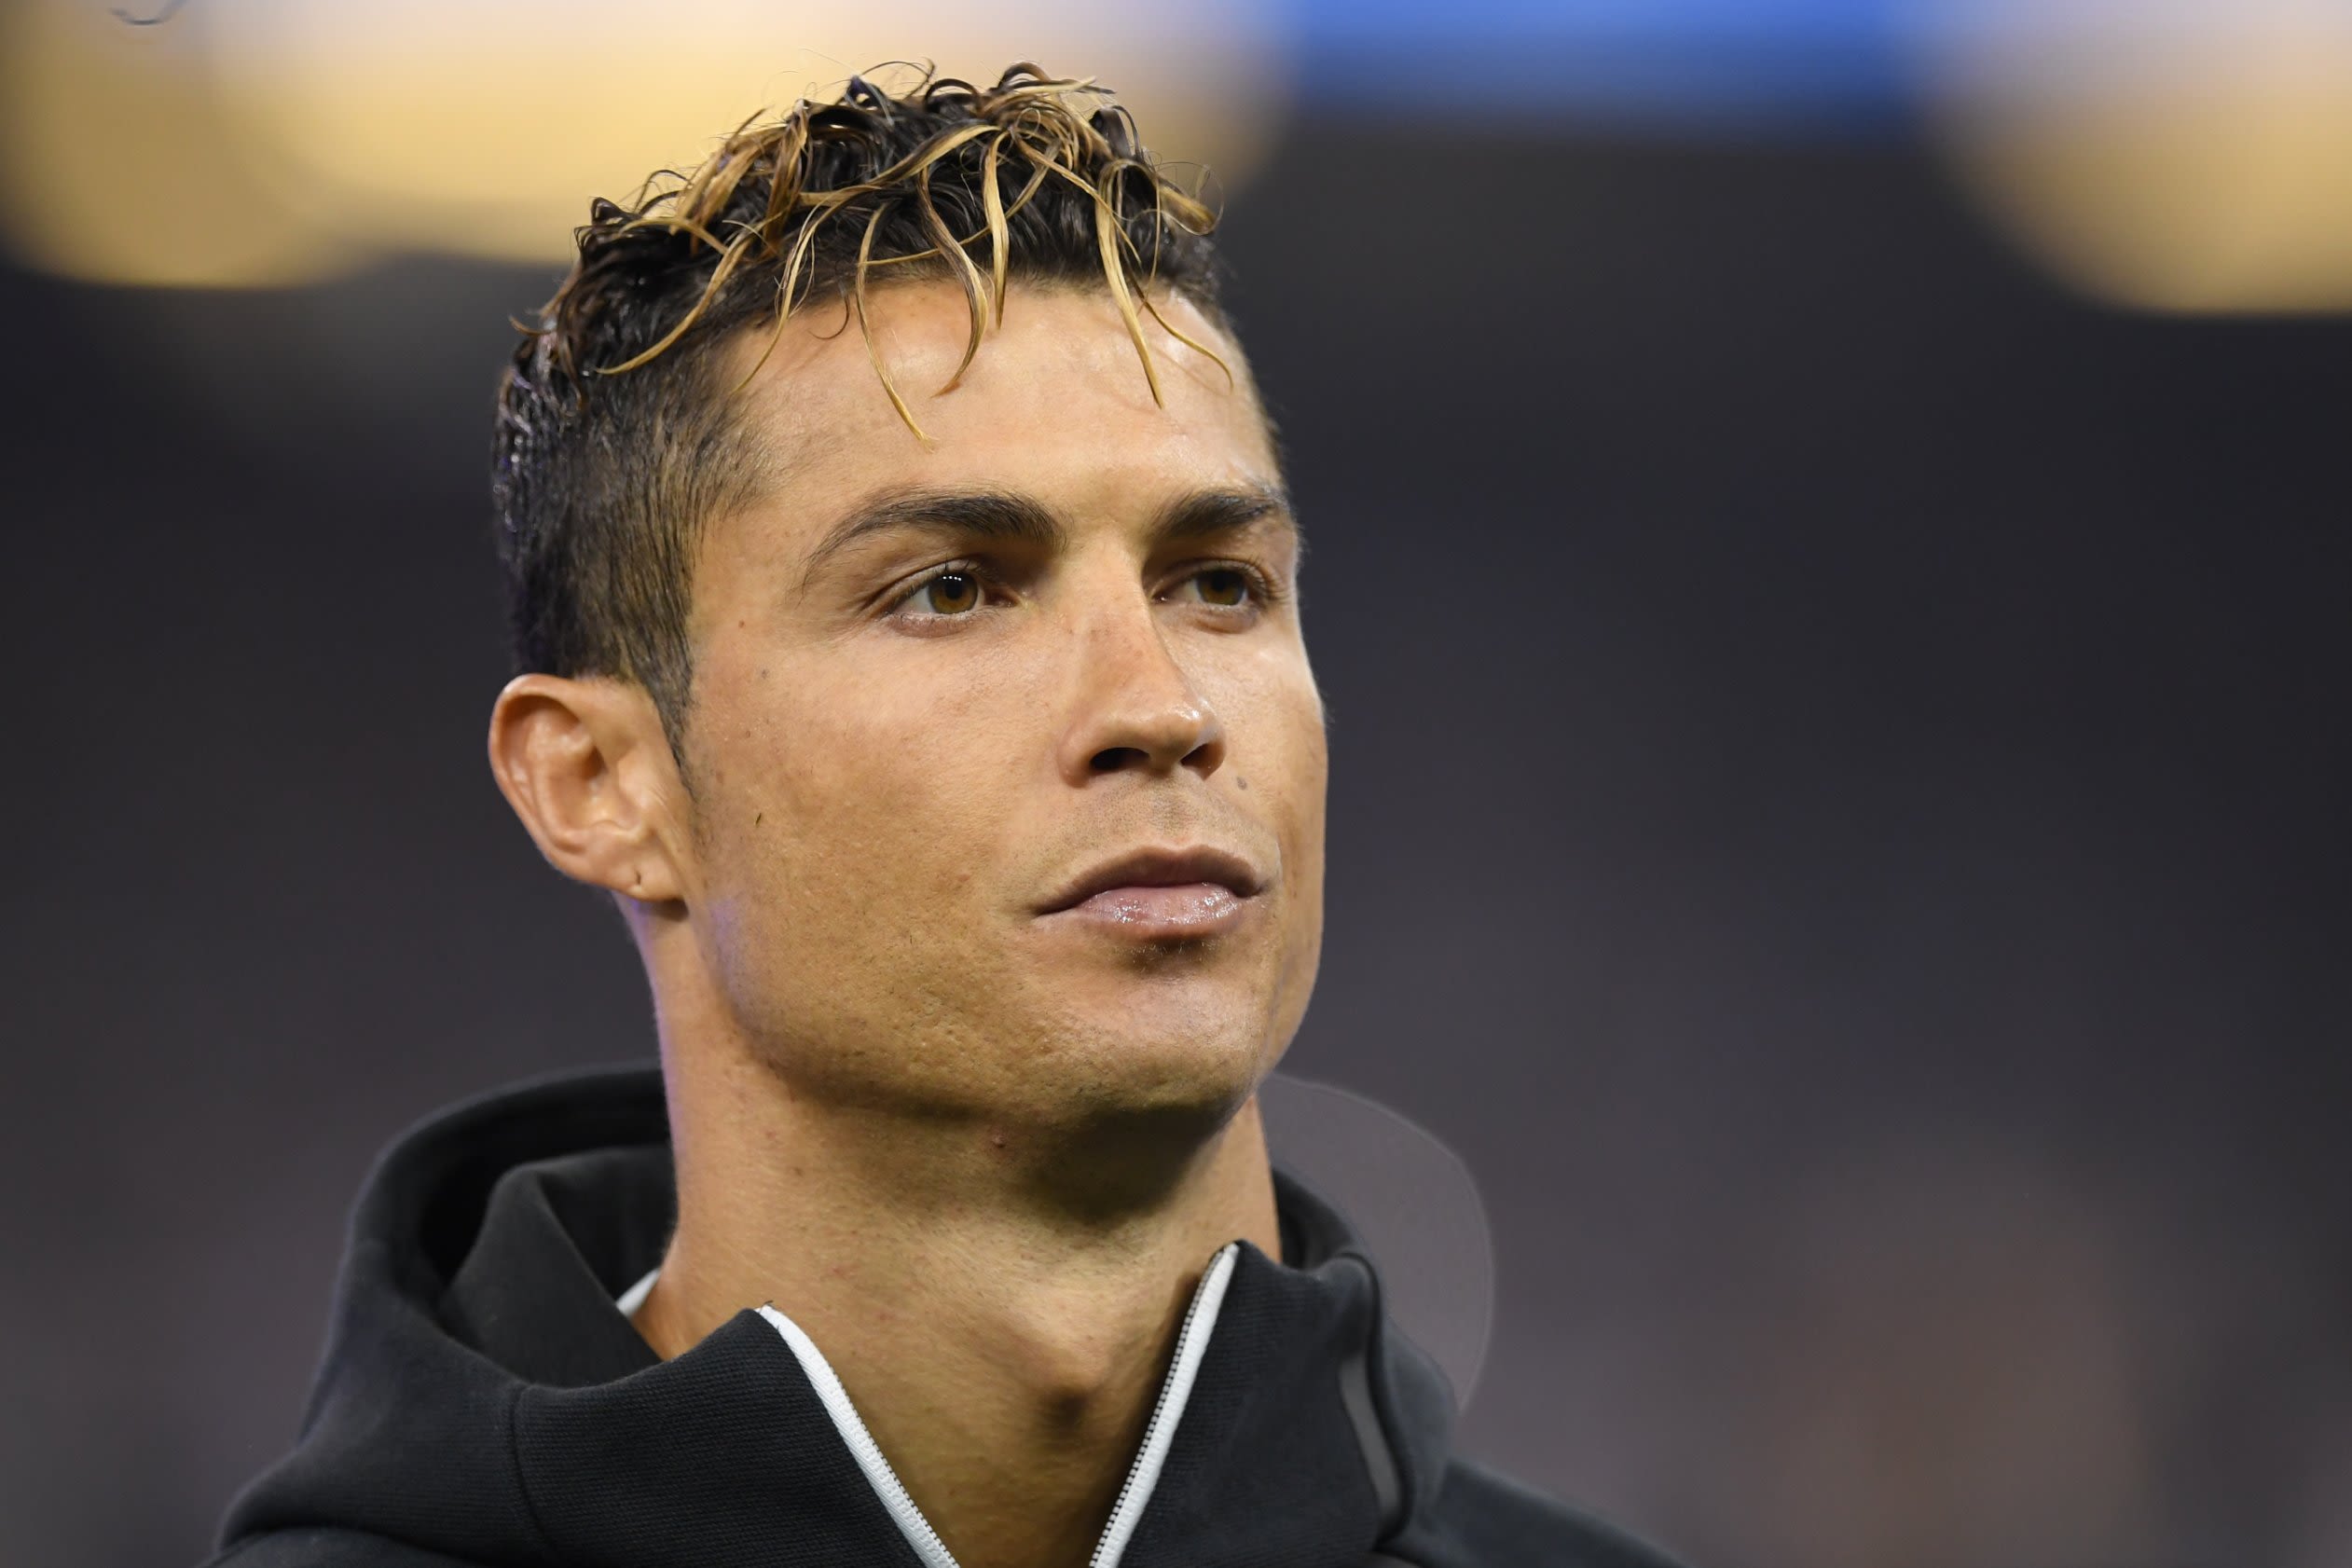 Real Madrid's Cristiano Ronaldo accused of $ tax evasion | CNN